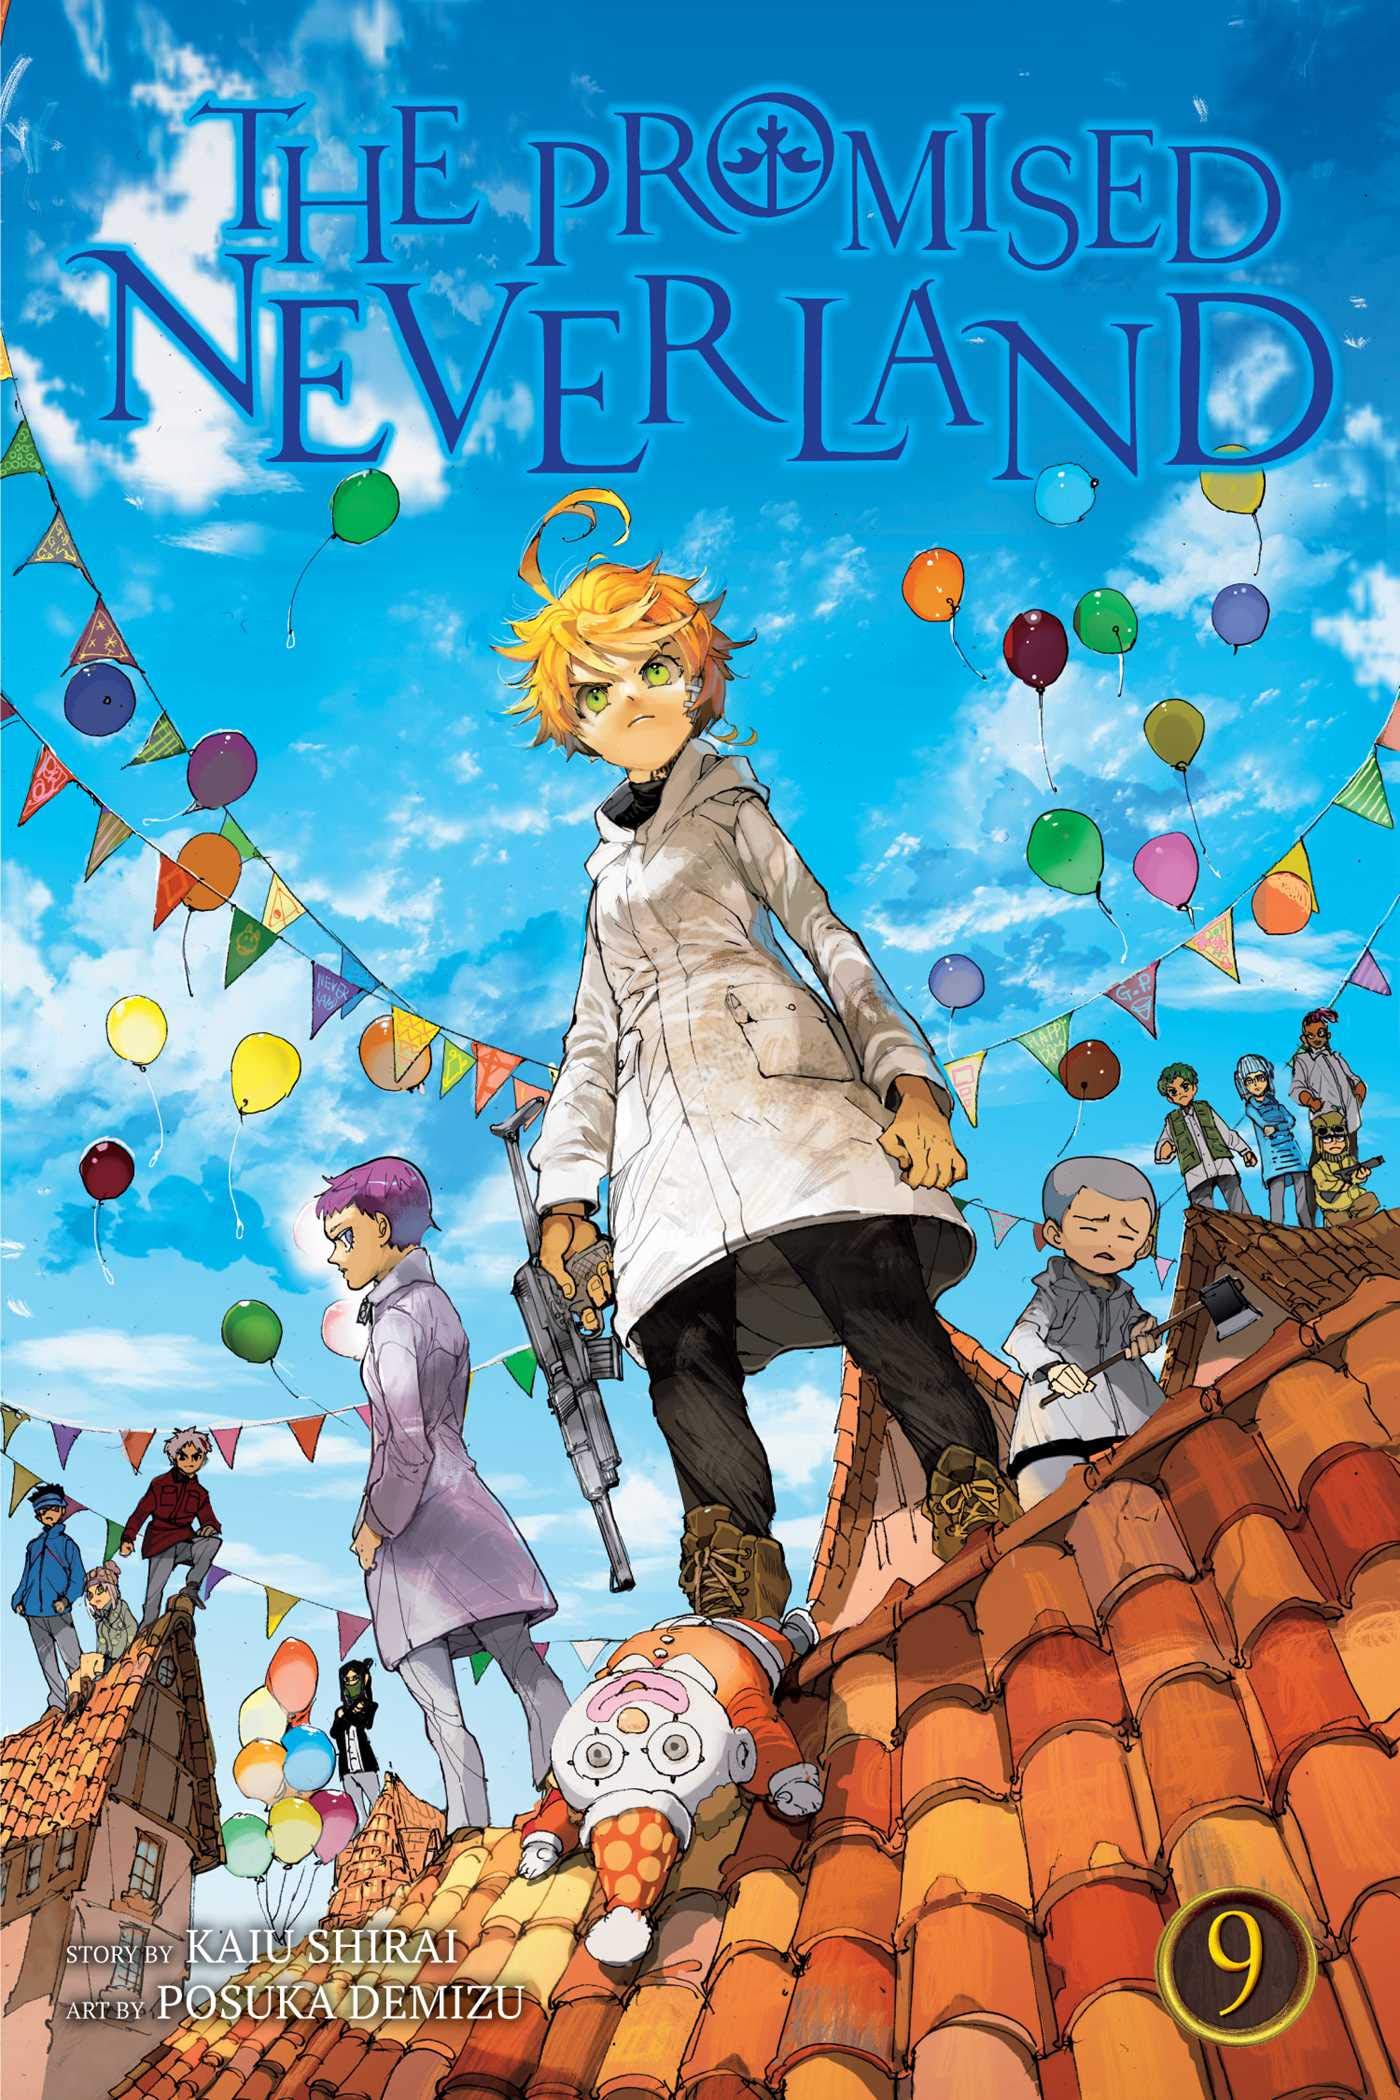 Die Jagd ist eröffnet - Comic-Review: The Promised Neverland #9